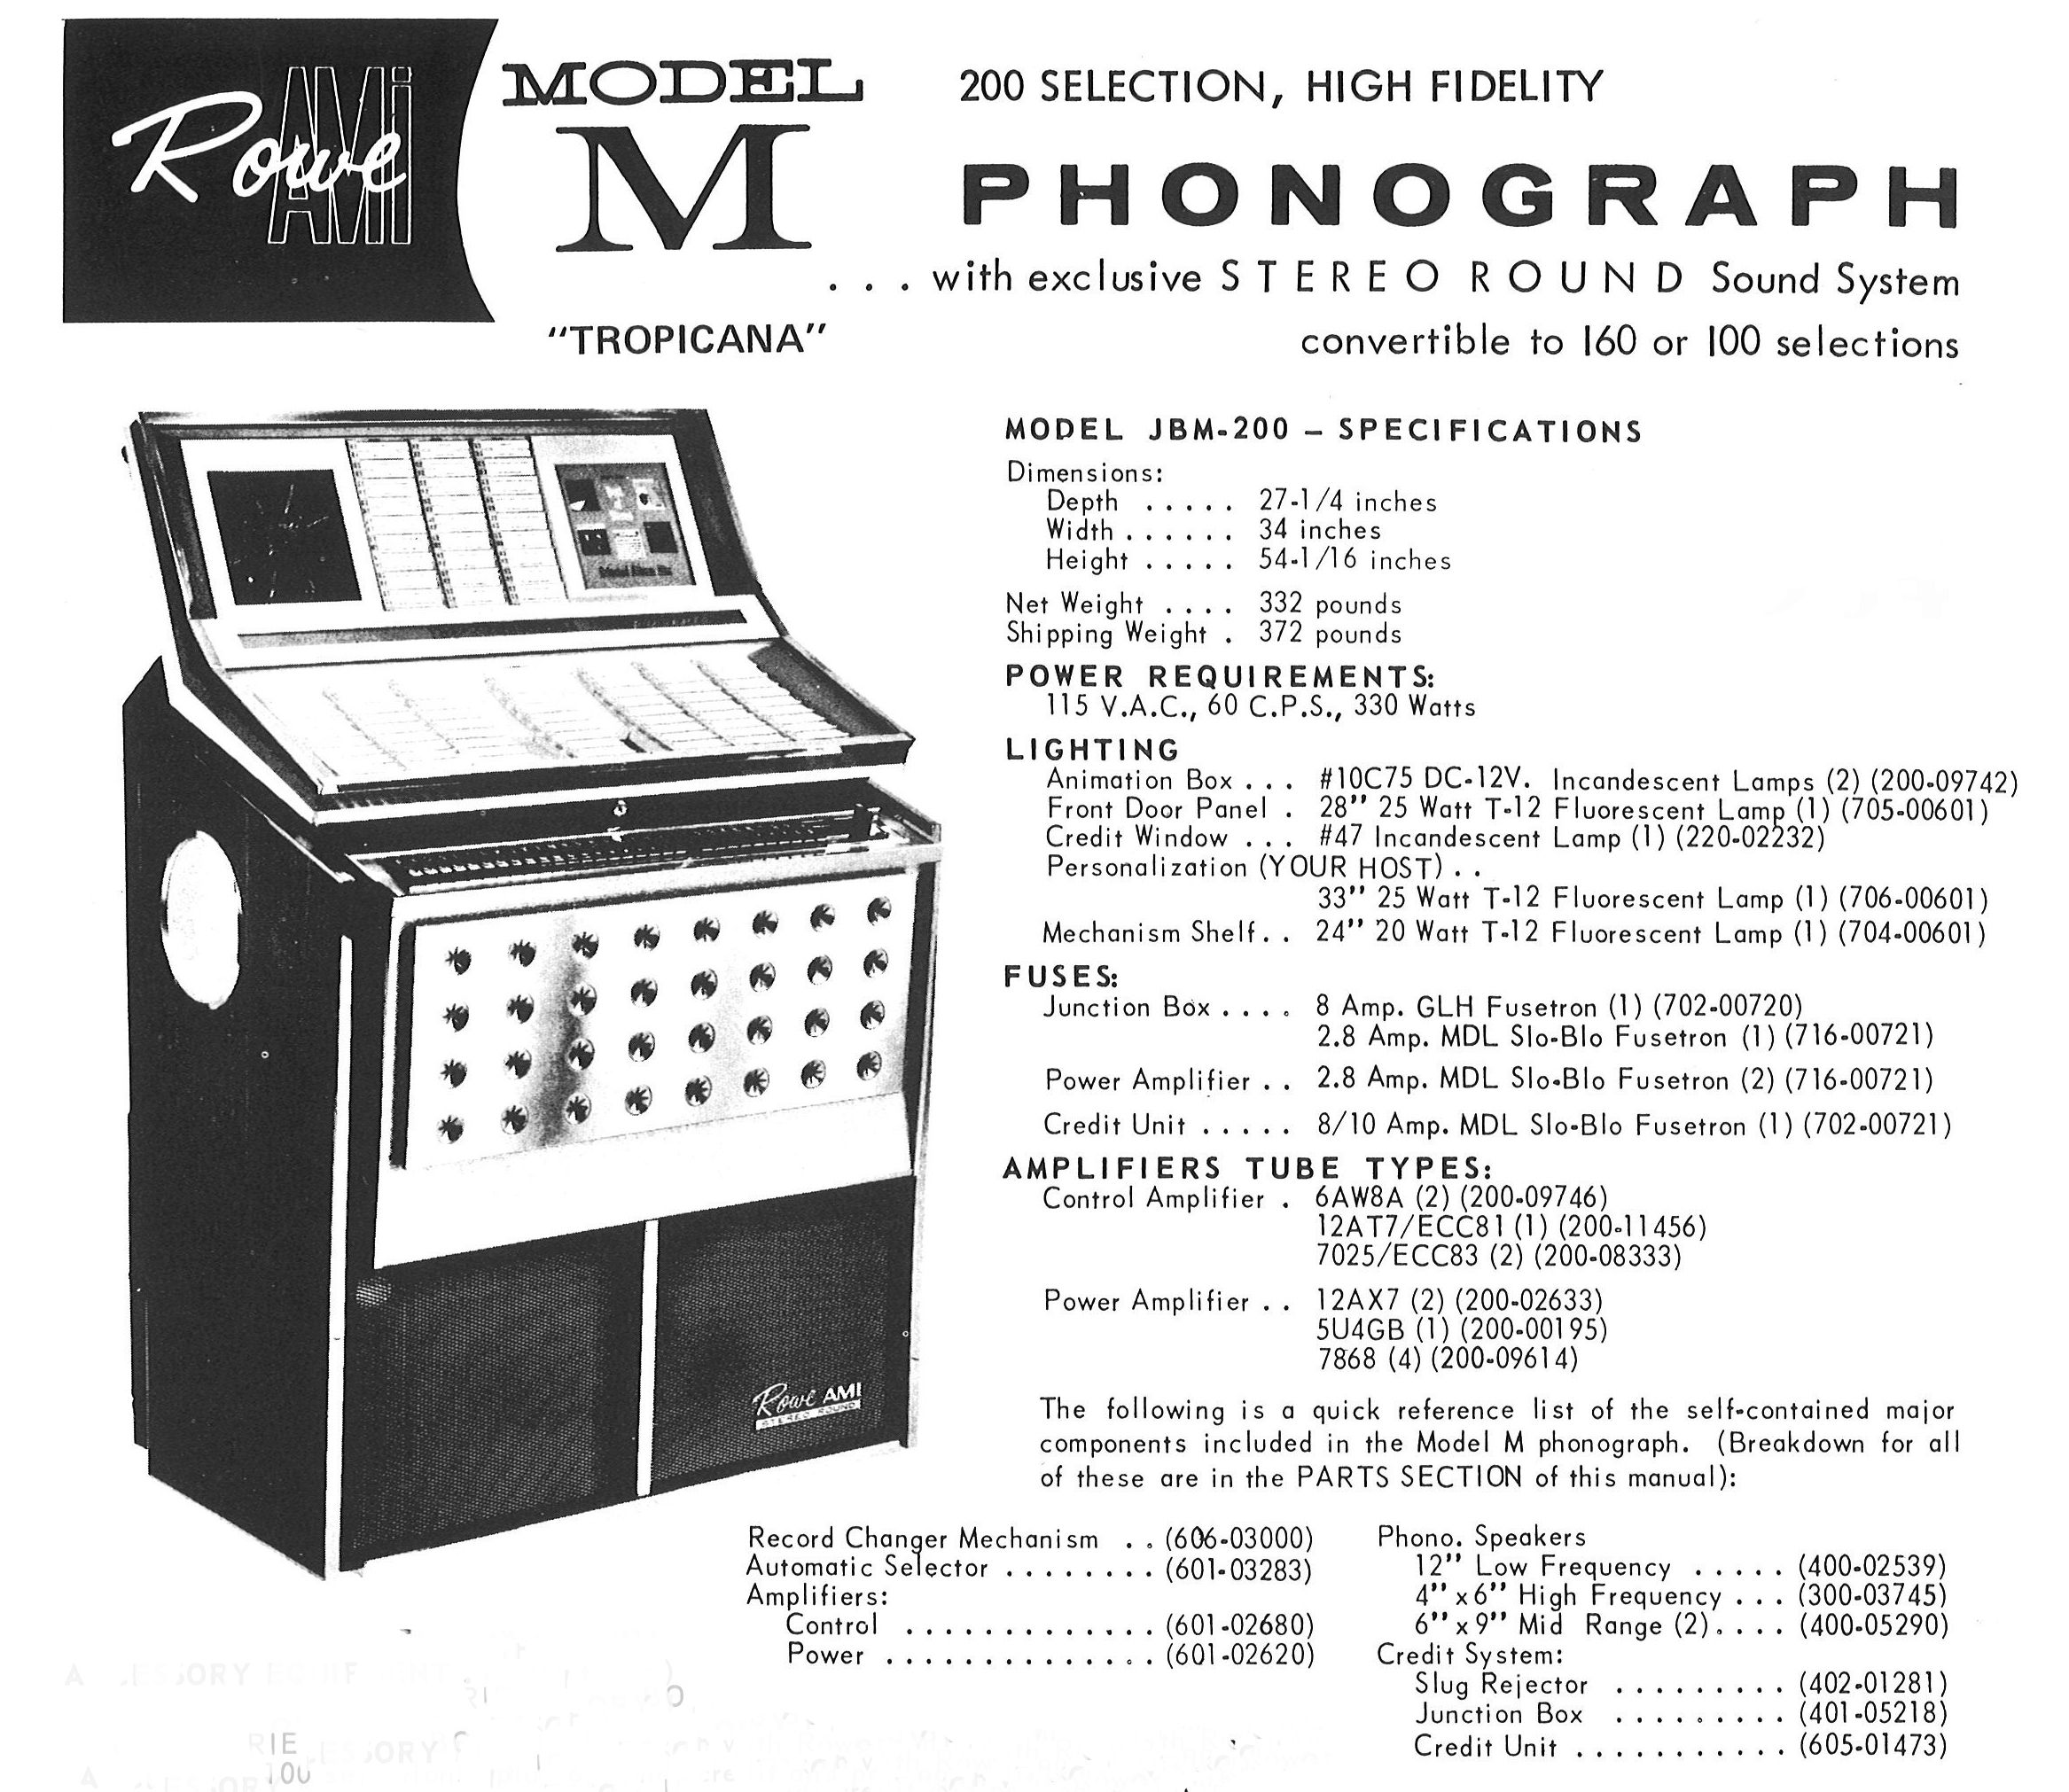 rowe ami 1964 tropicana jukebox manual